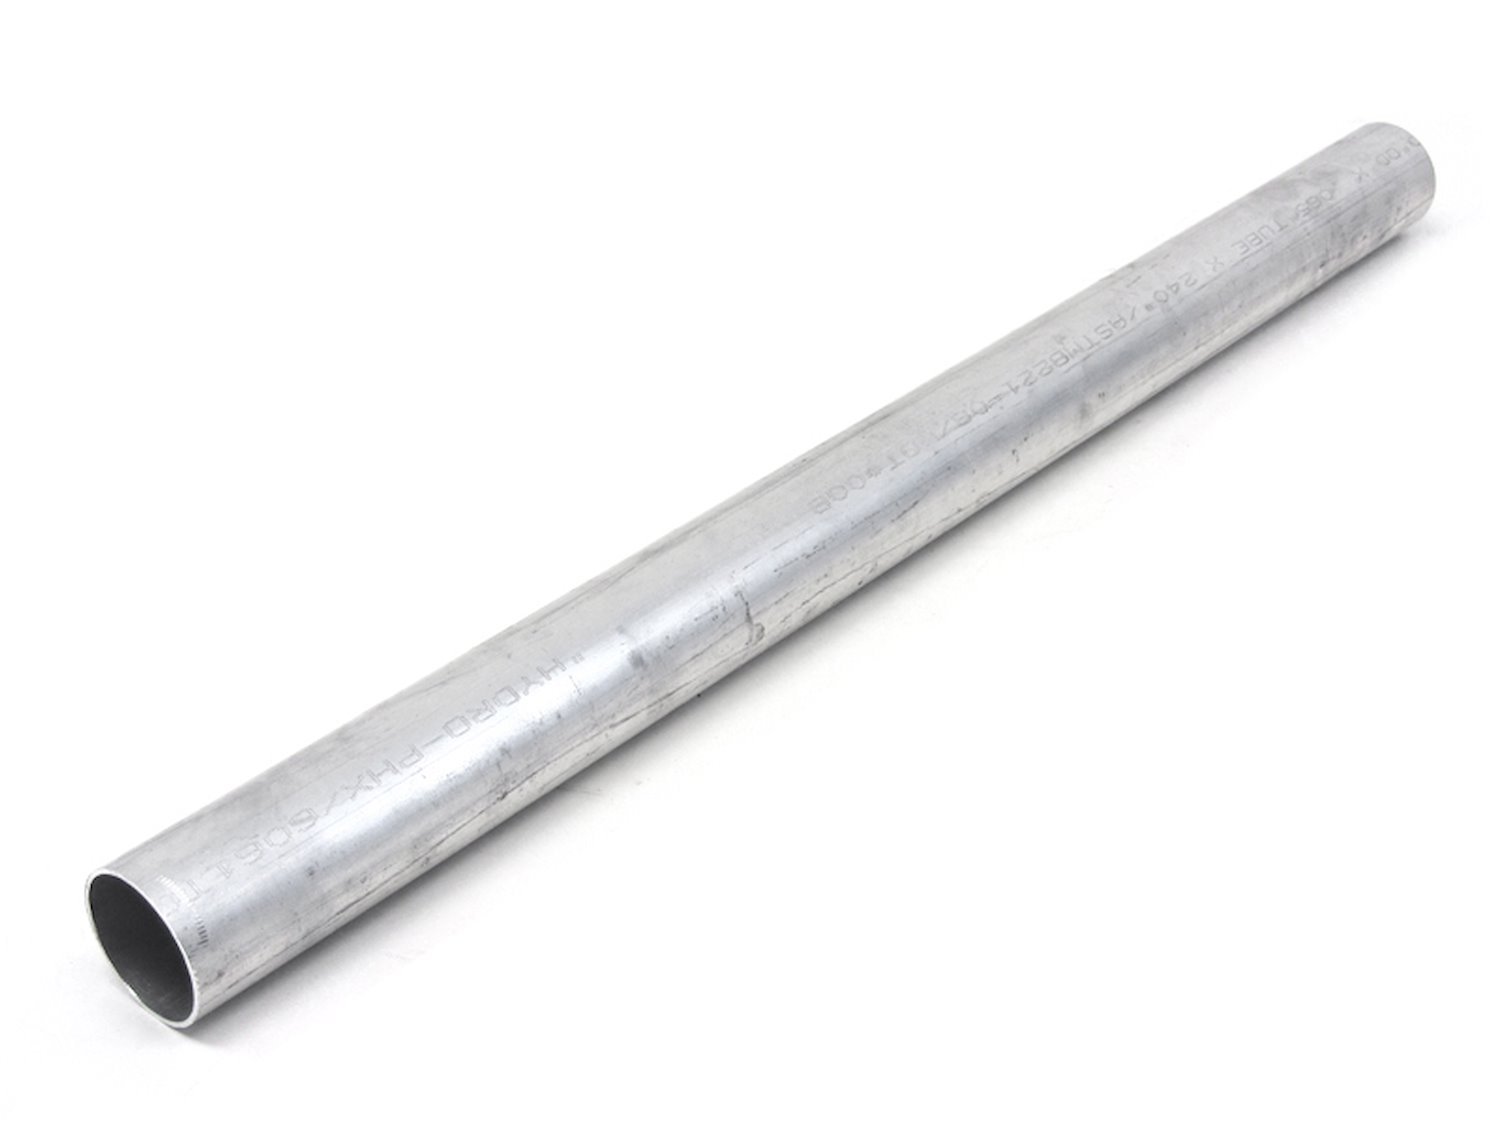 AST-150 Aluminum Tubing, 6061 Aluminum, Straight Tubing, 1-1/2 in. OD, Seamless, Raw Finish, 1 ft. Long